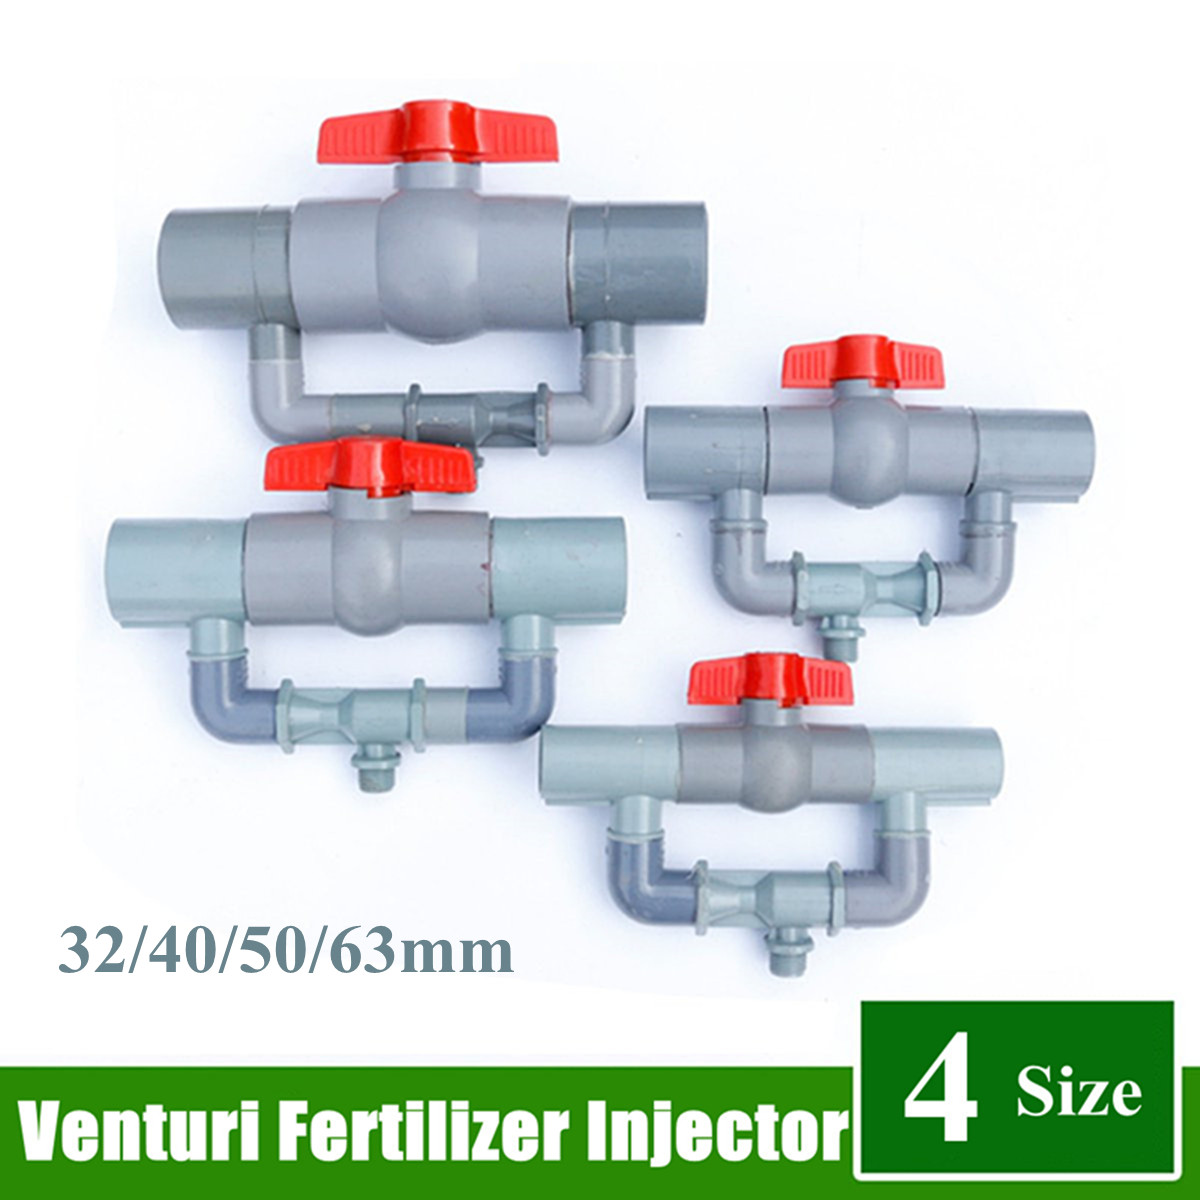 Filter Switch Roadiress Garden Irrigation Device Kit G3/4 Fertilizer Injector Water Tube Fertilizer Injector